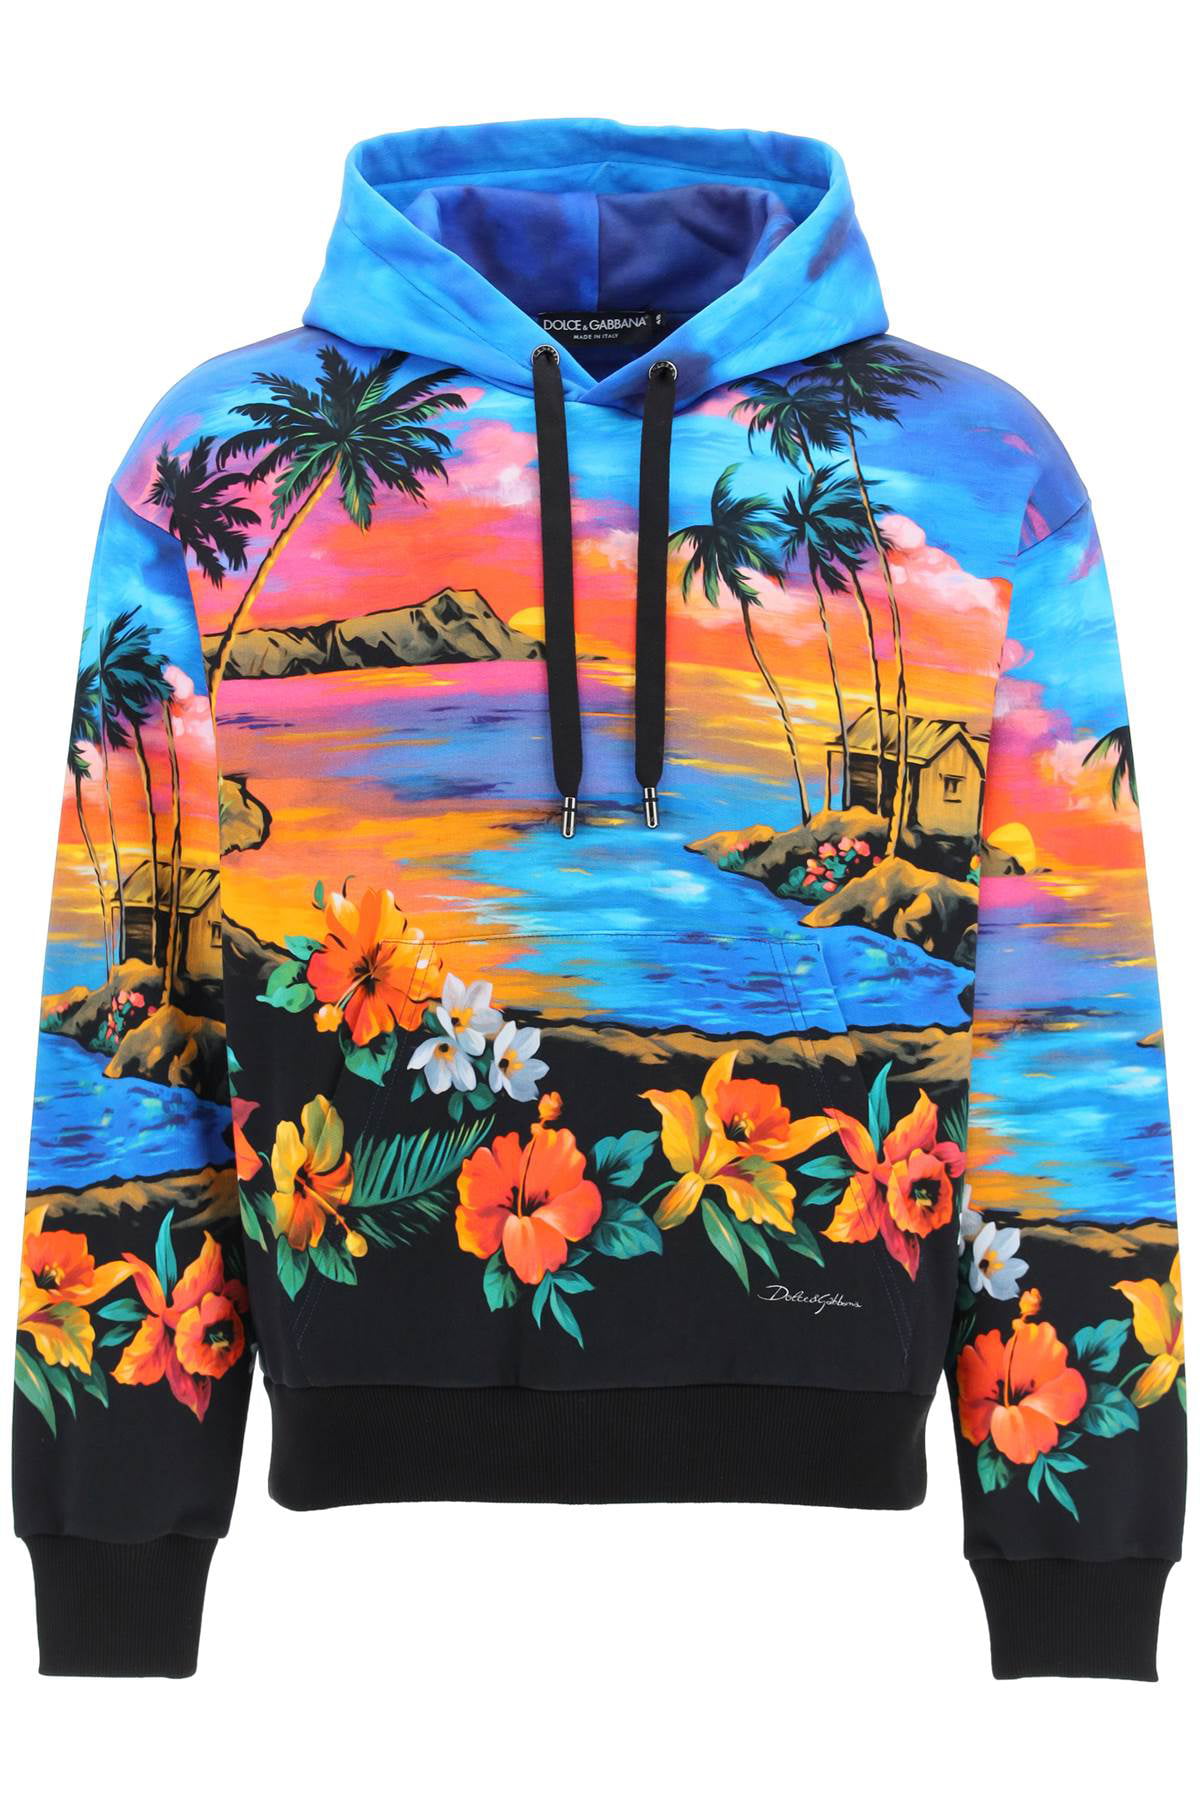 Dolce & gabbana hawaii print hoodie 